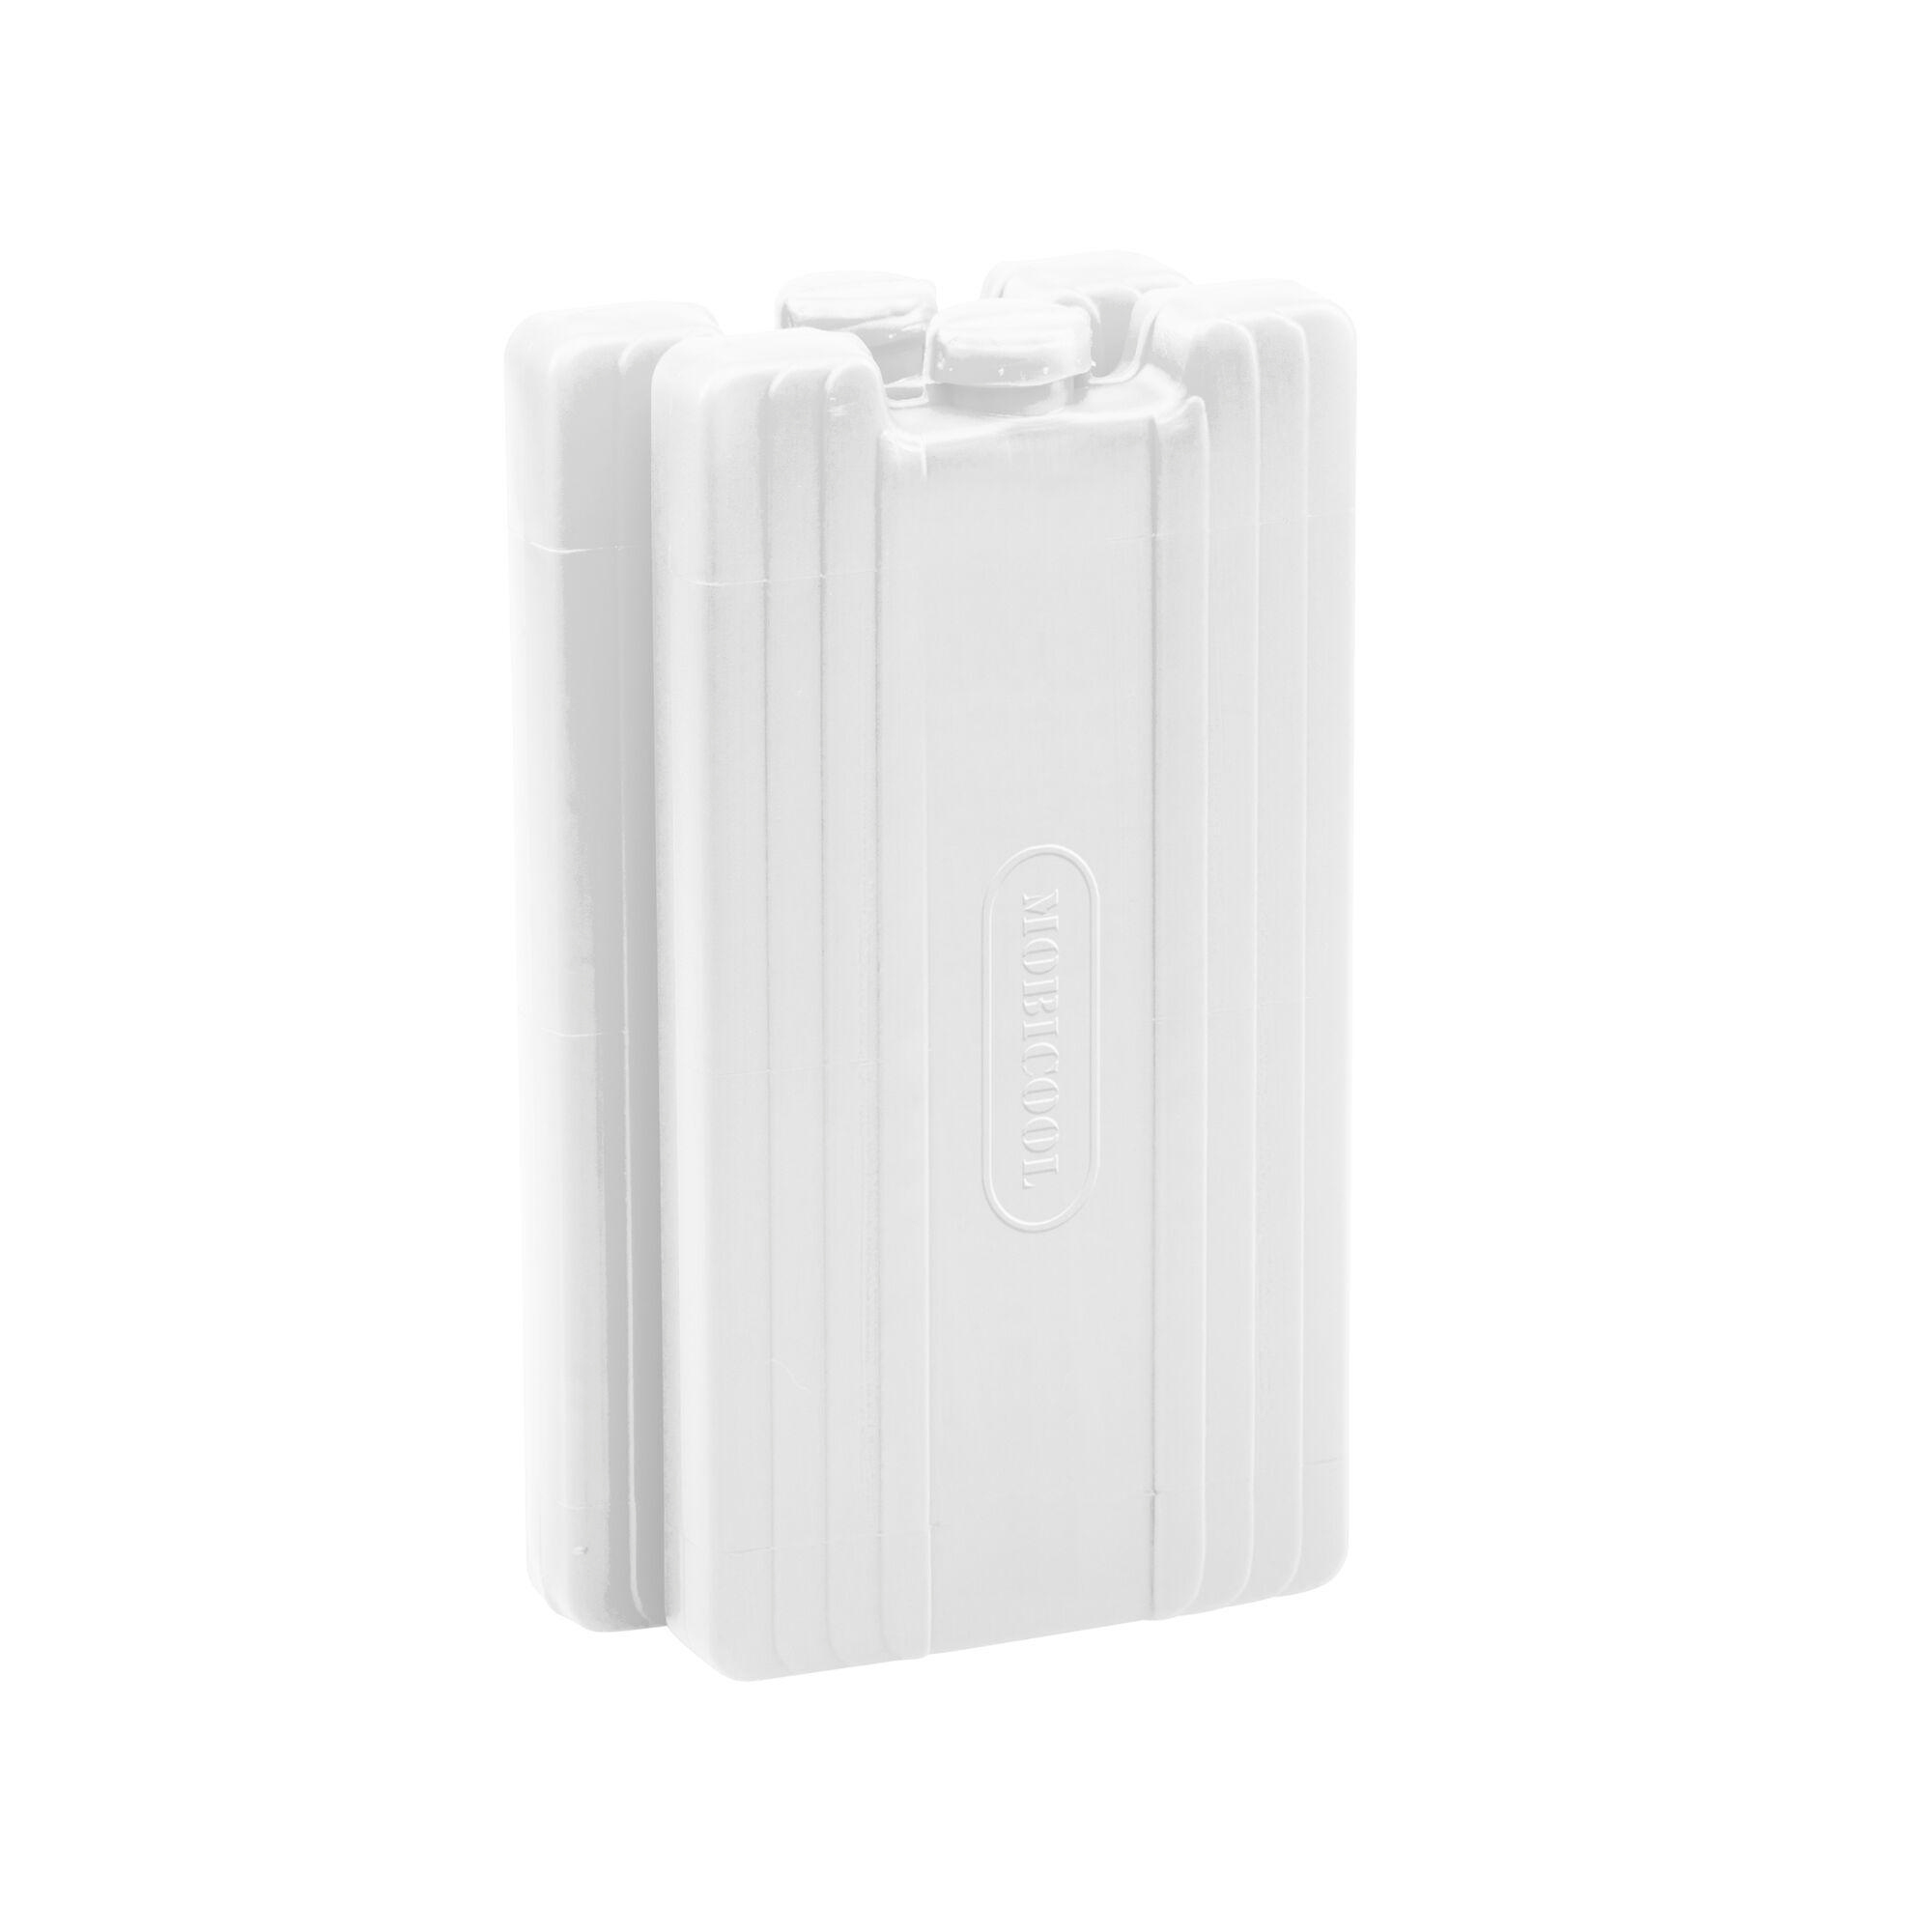 Kühlakku MOBICOOL (Weiß) ICE PACK 220